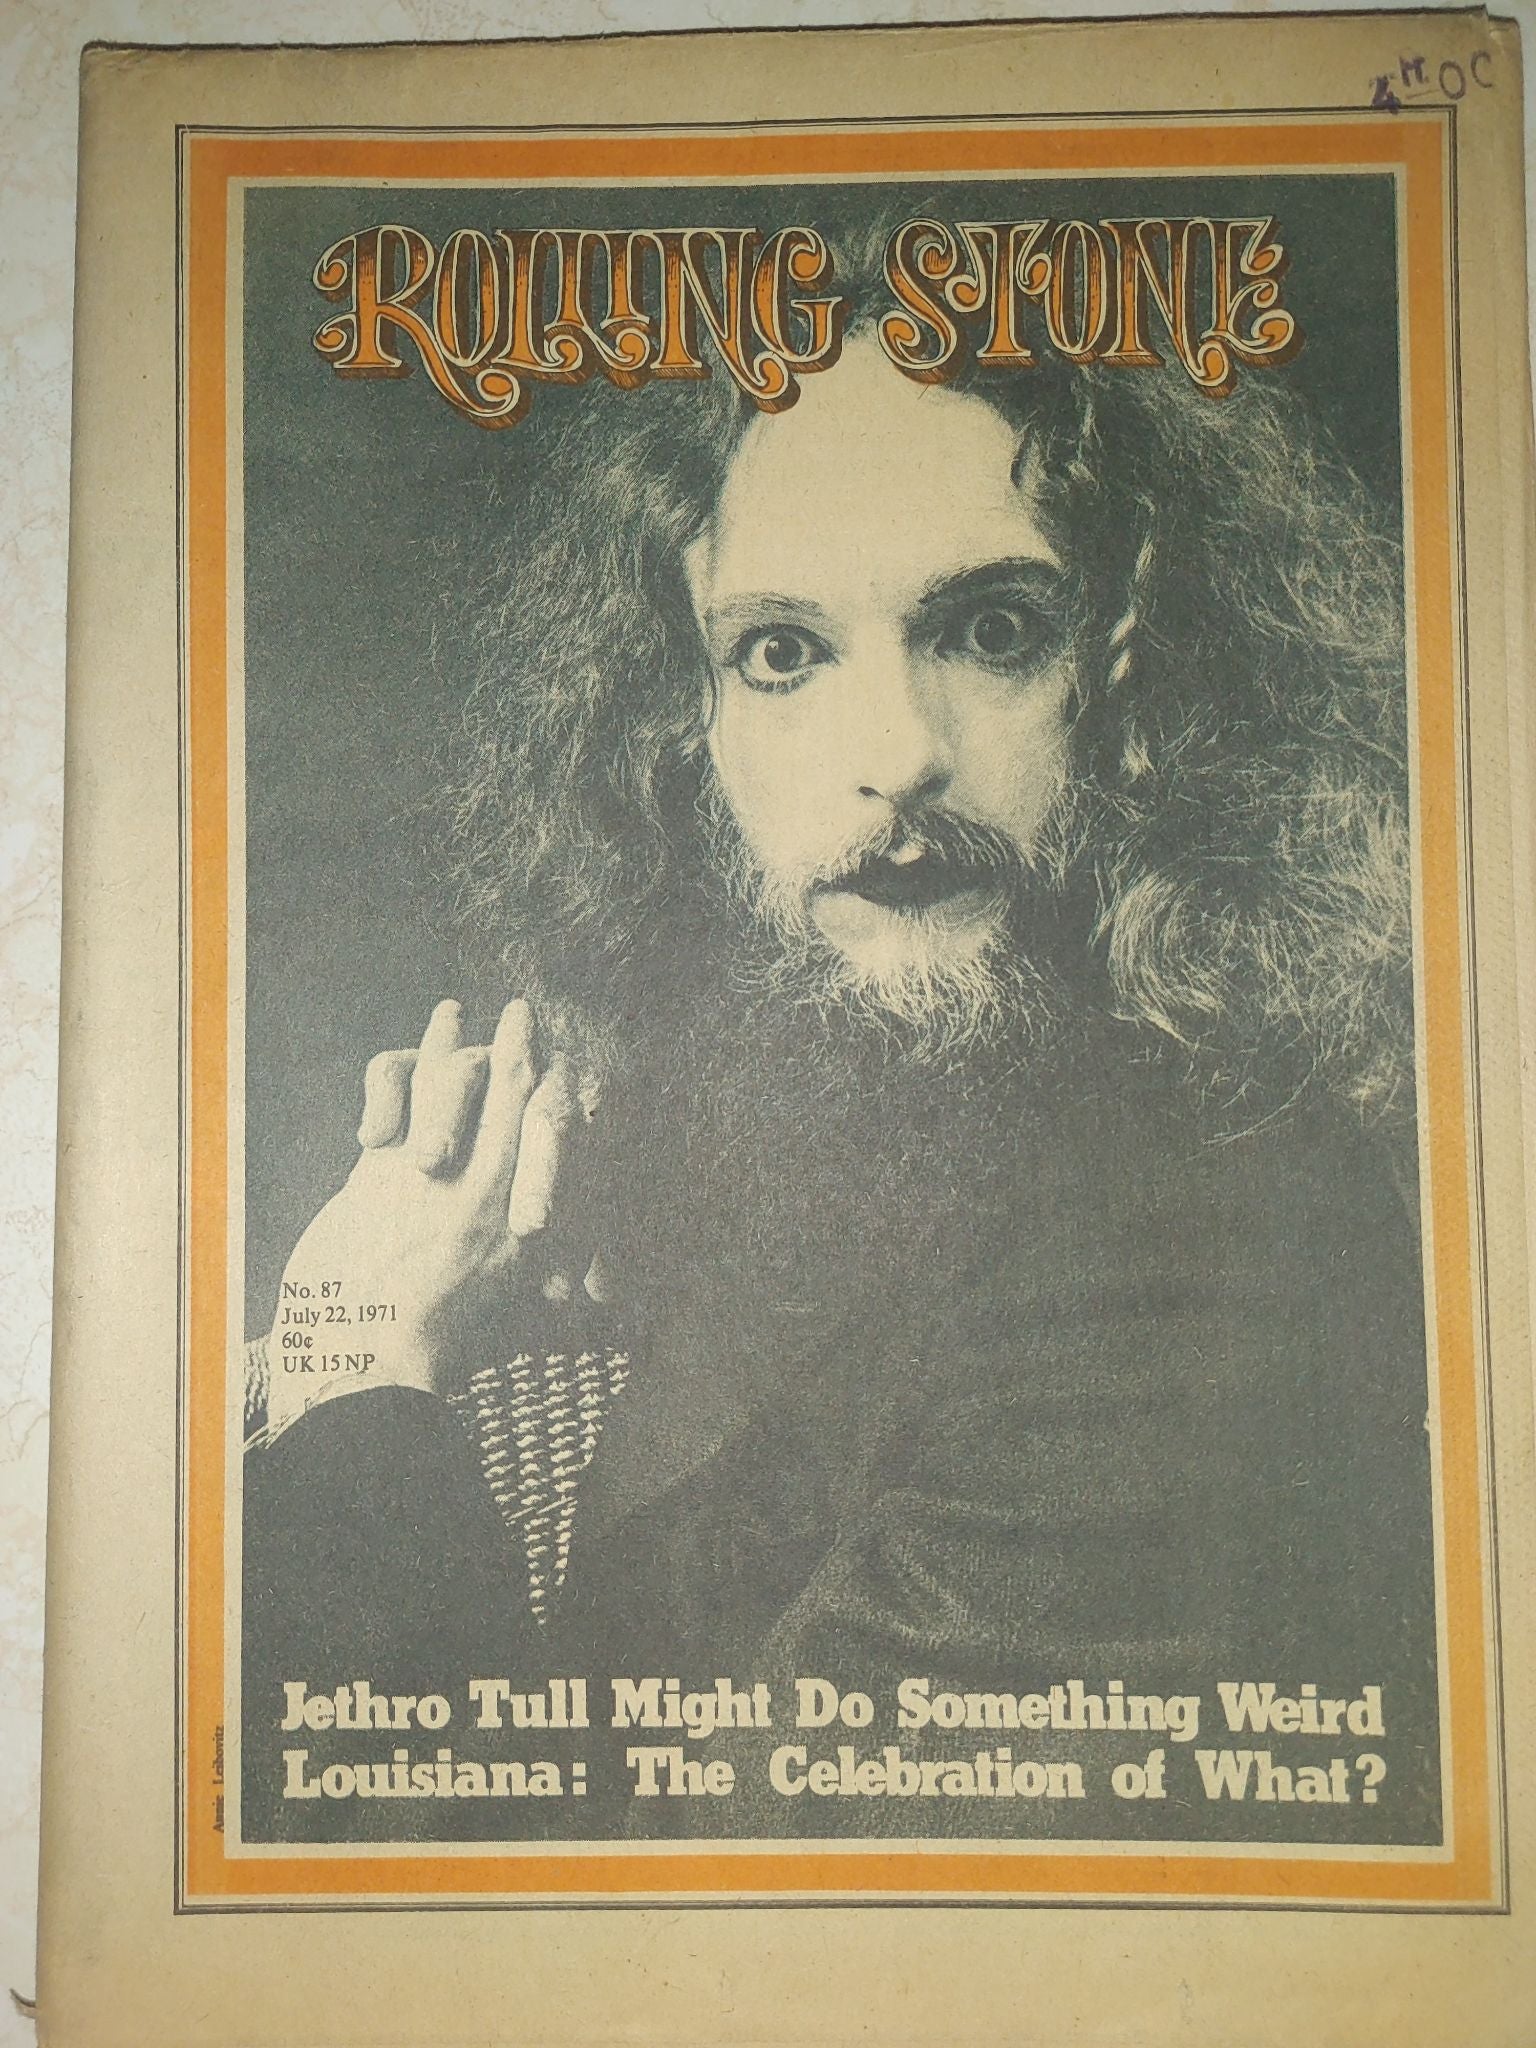 Rolling Stone Magazine July 22, 1971 Issue # 87 Jethro Tull